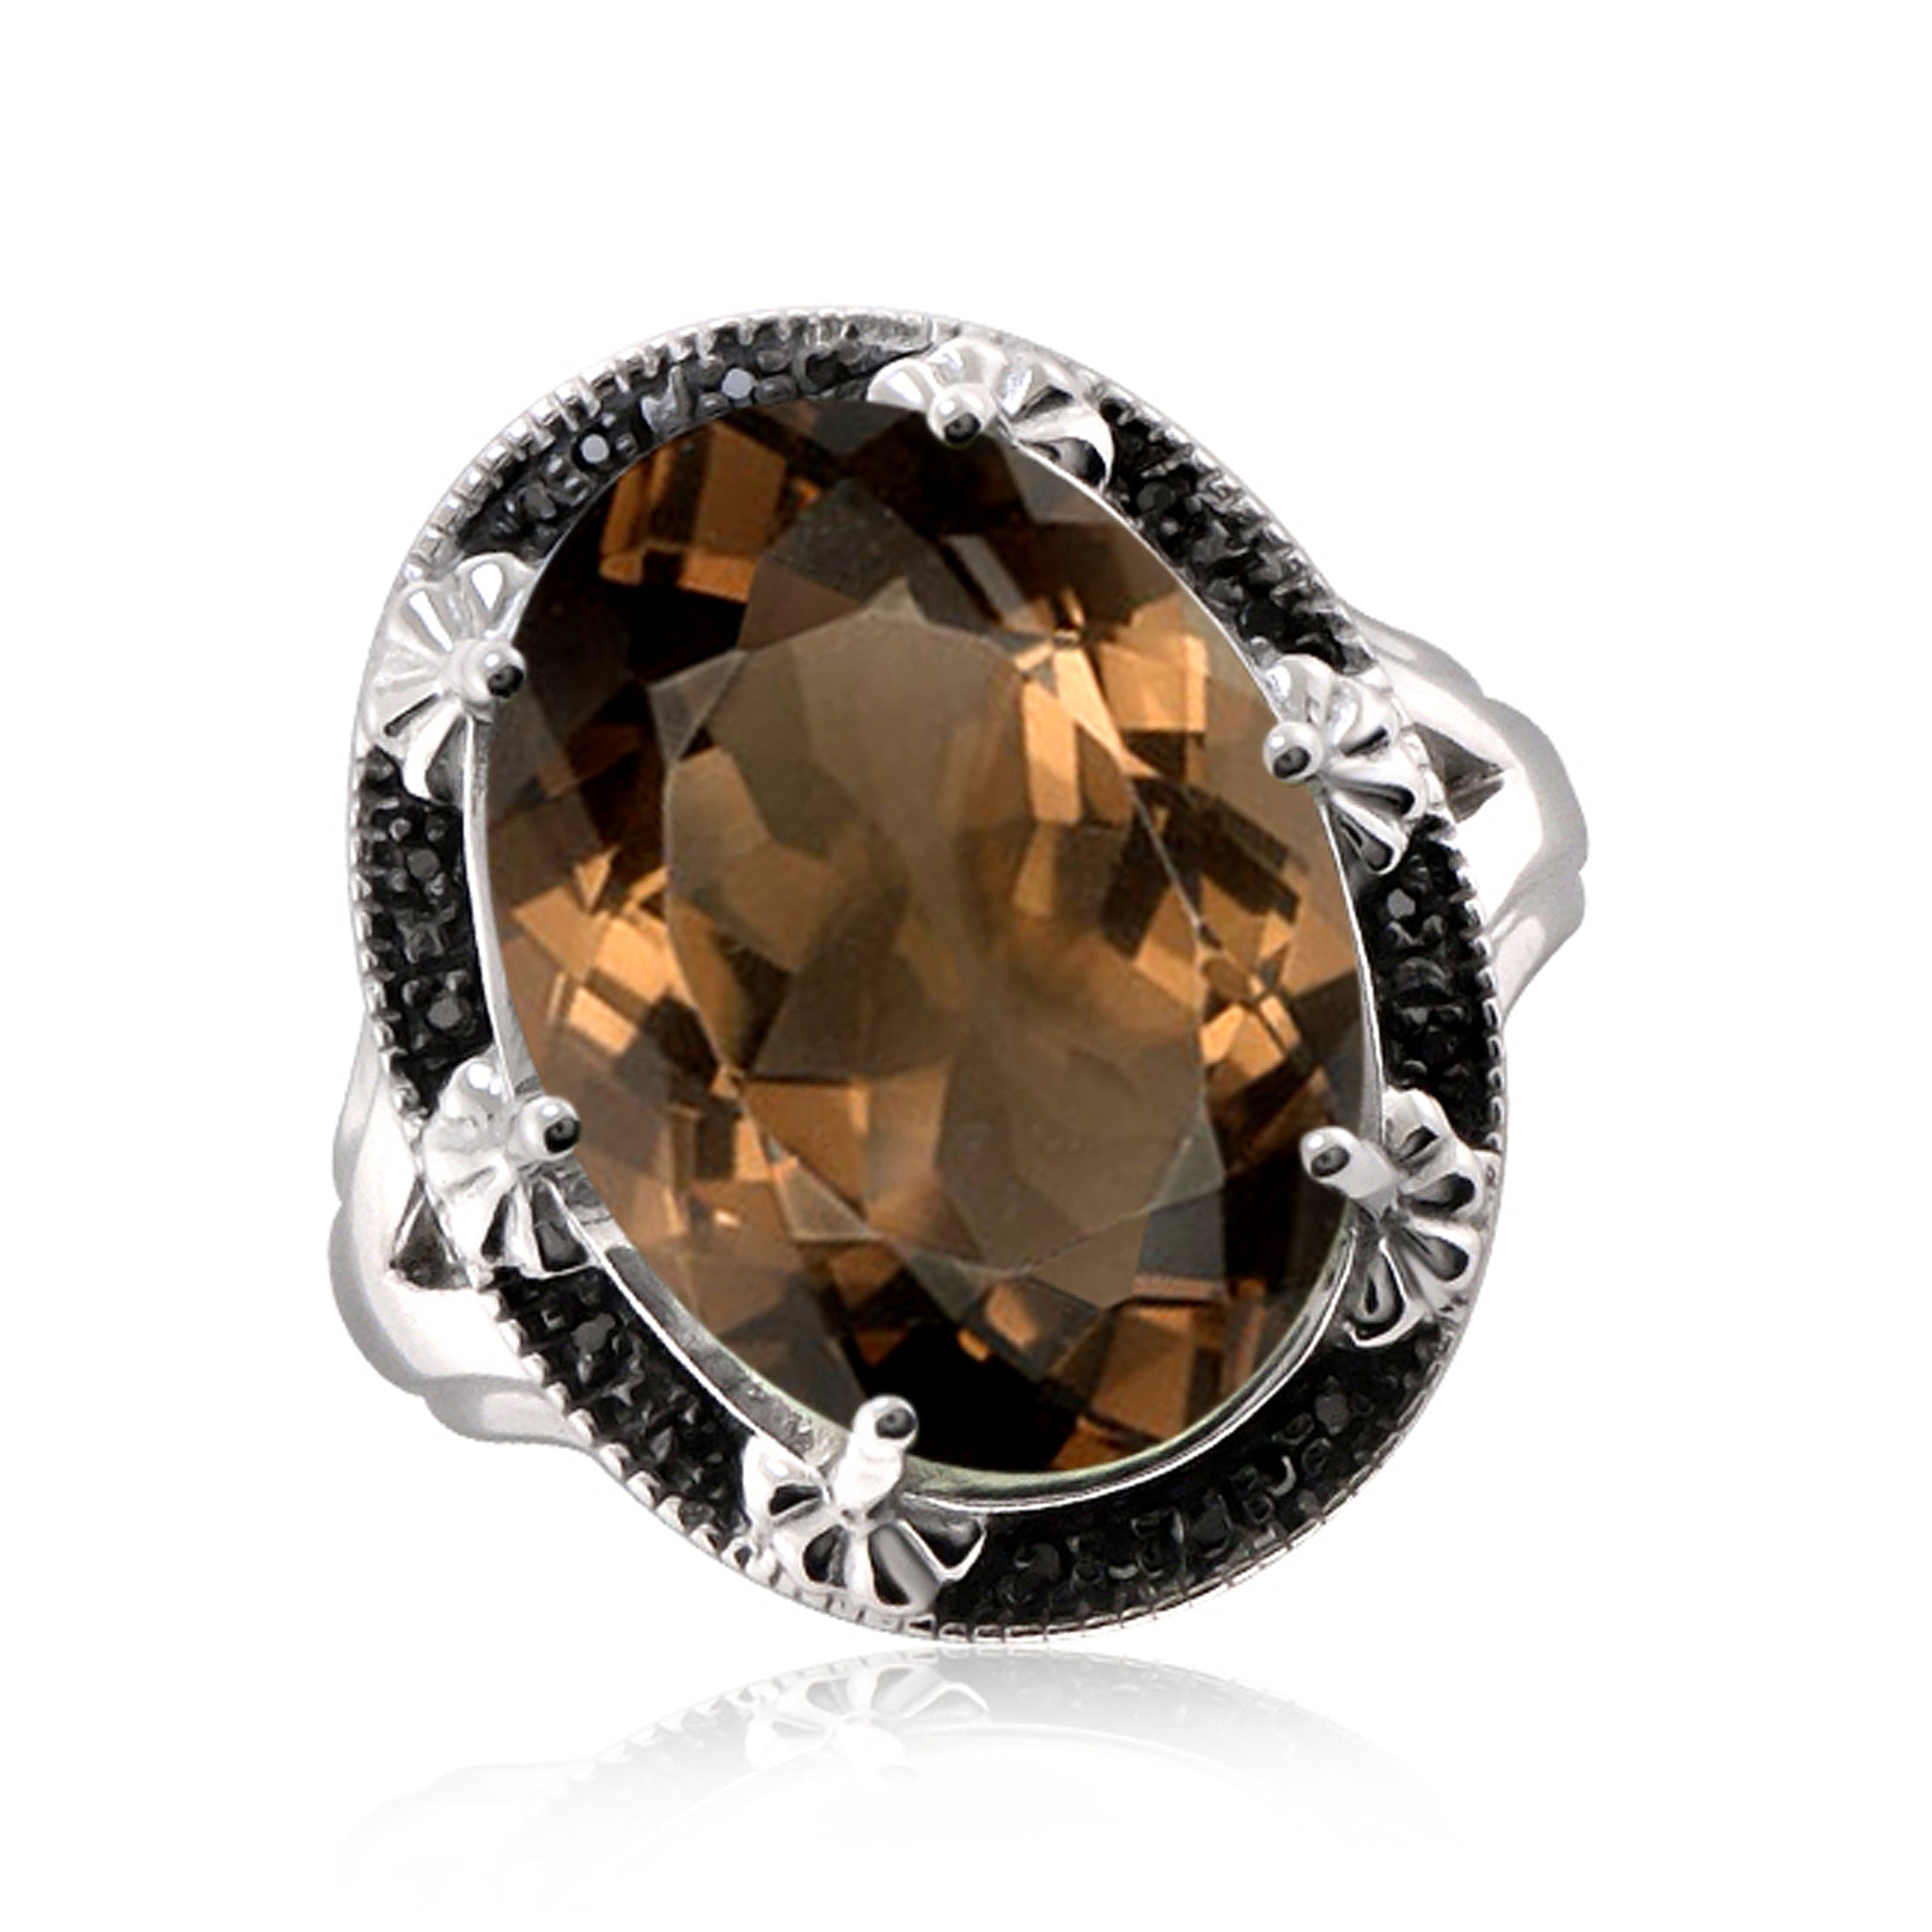 JewelonFire 11 1/4 Carat T.G.W. Smoky Quartz And 1/20 Carat T.W. Black Diamond Sterling Silver Ring